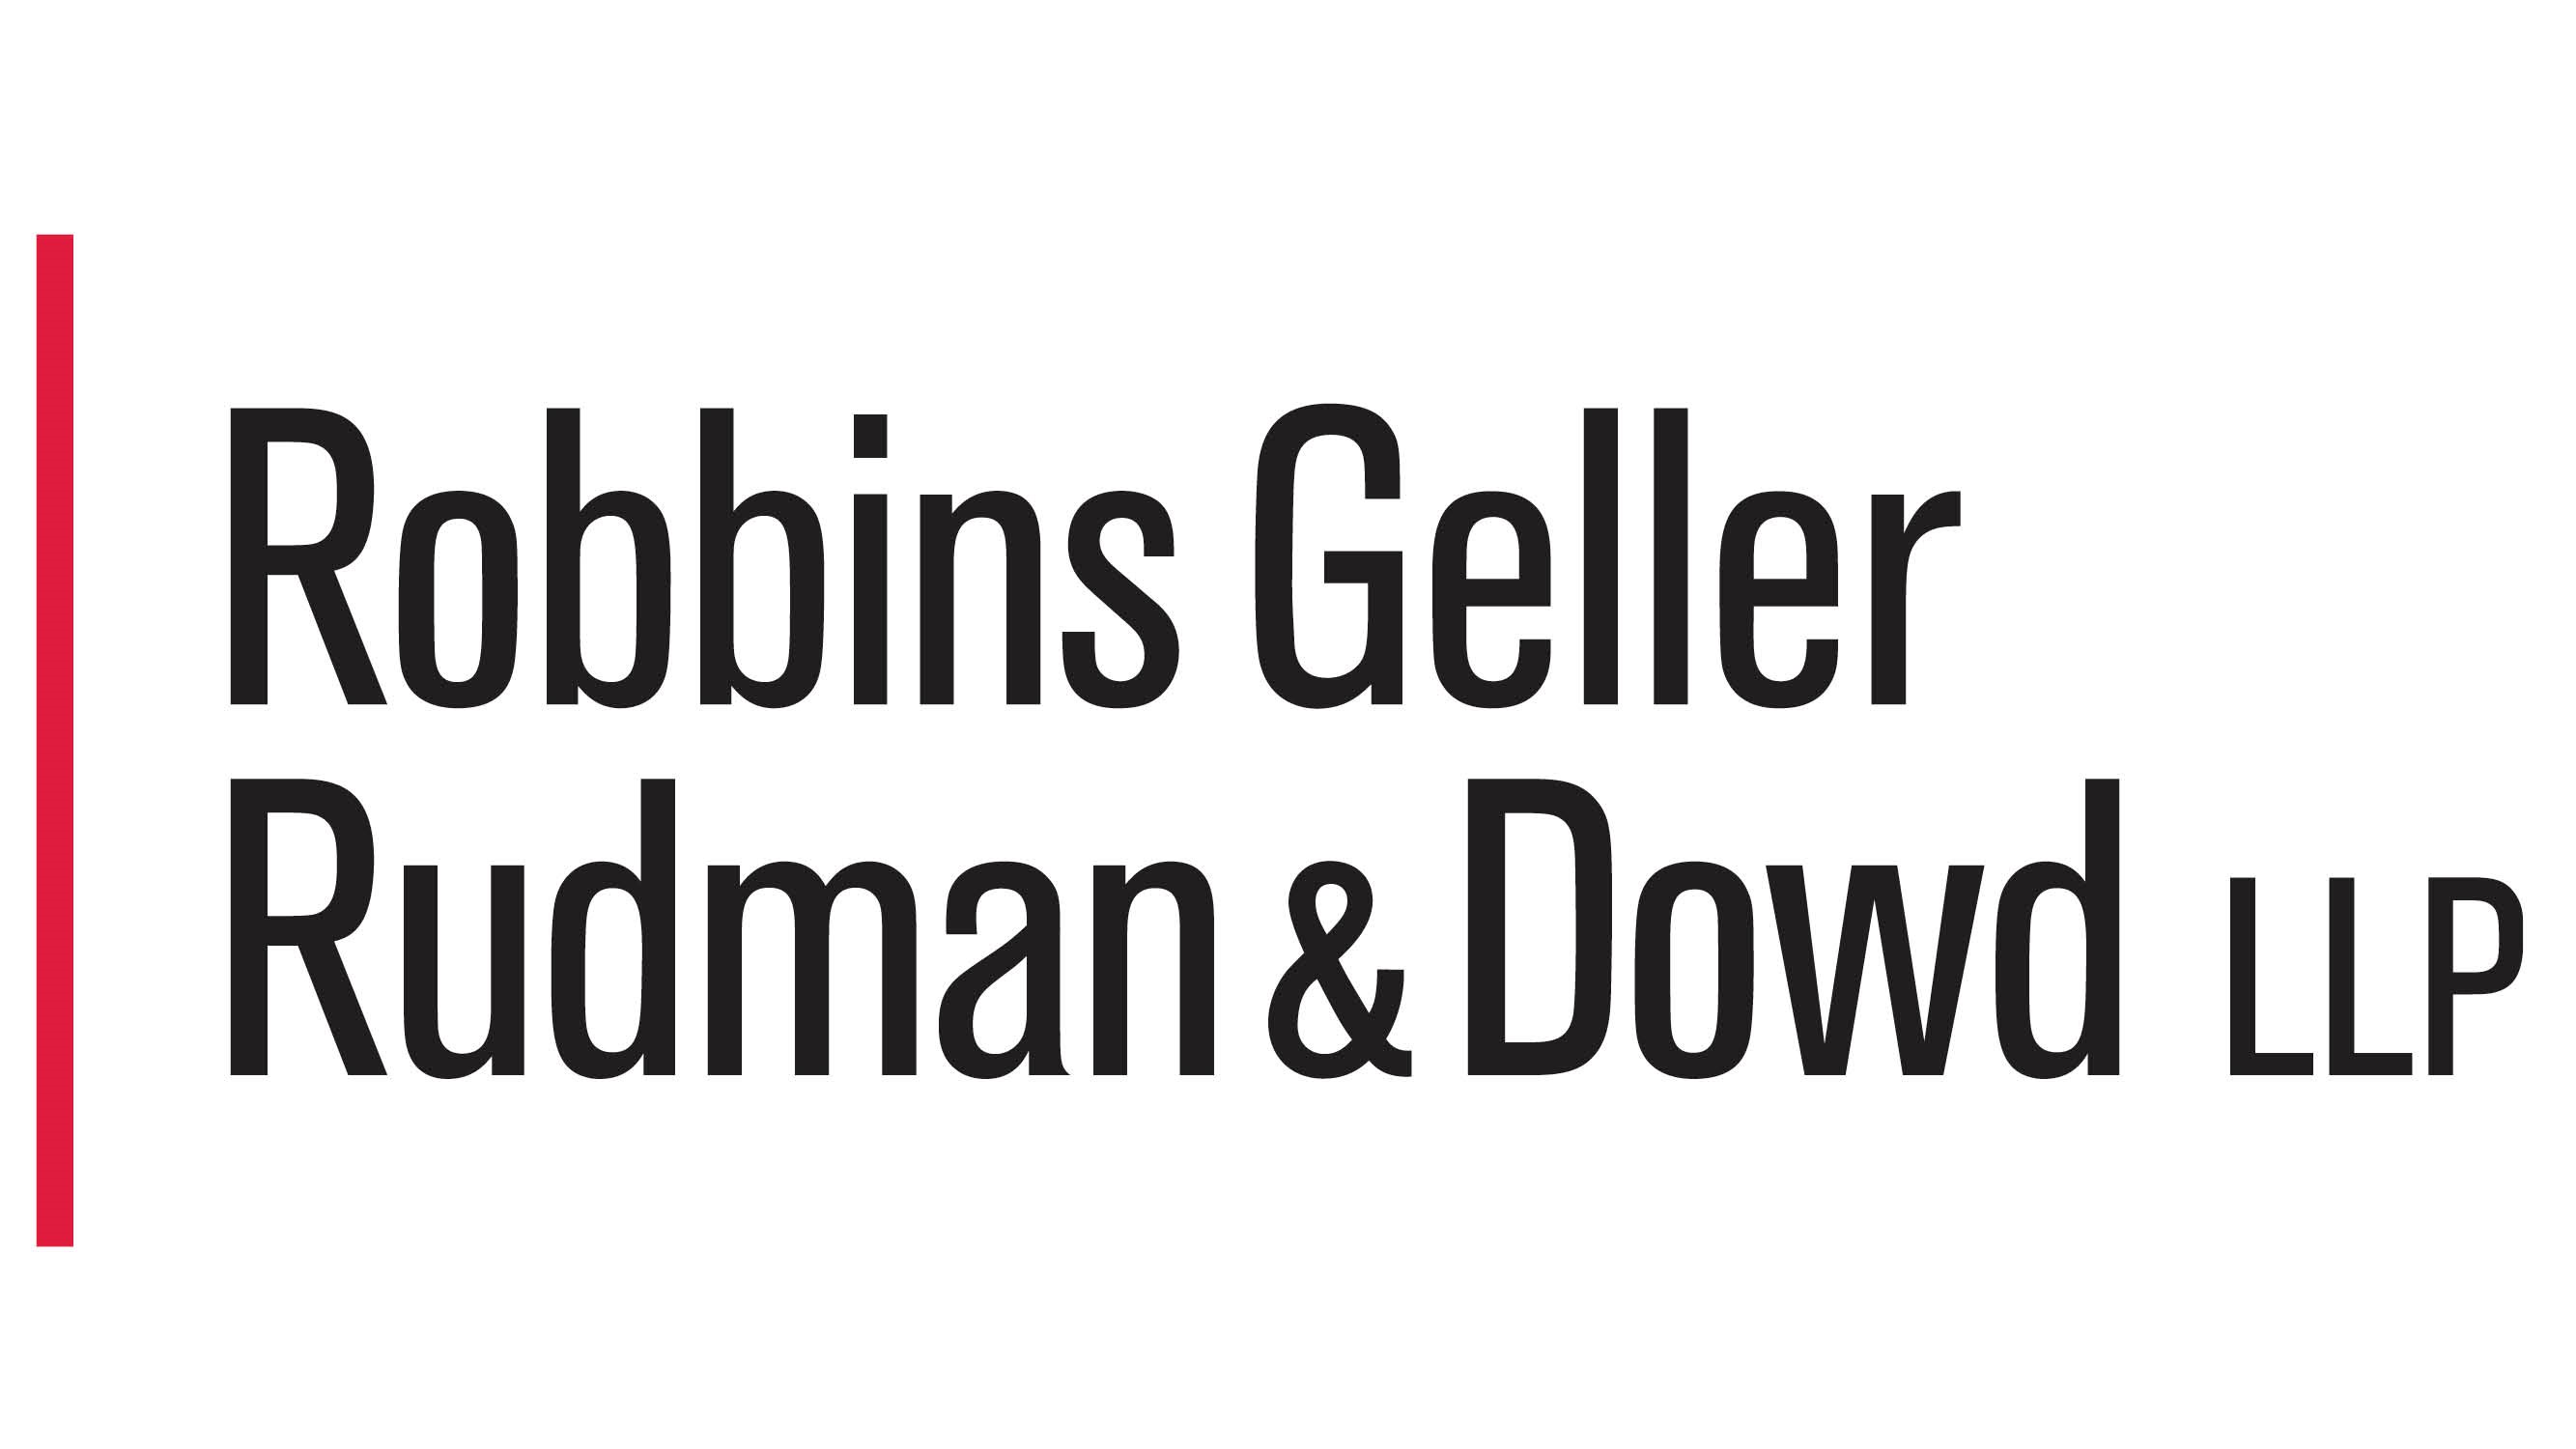 Robbins Geller Rudman & Dowd LLP, Tuesday, September 21, 2021, Press release picture